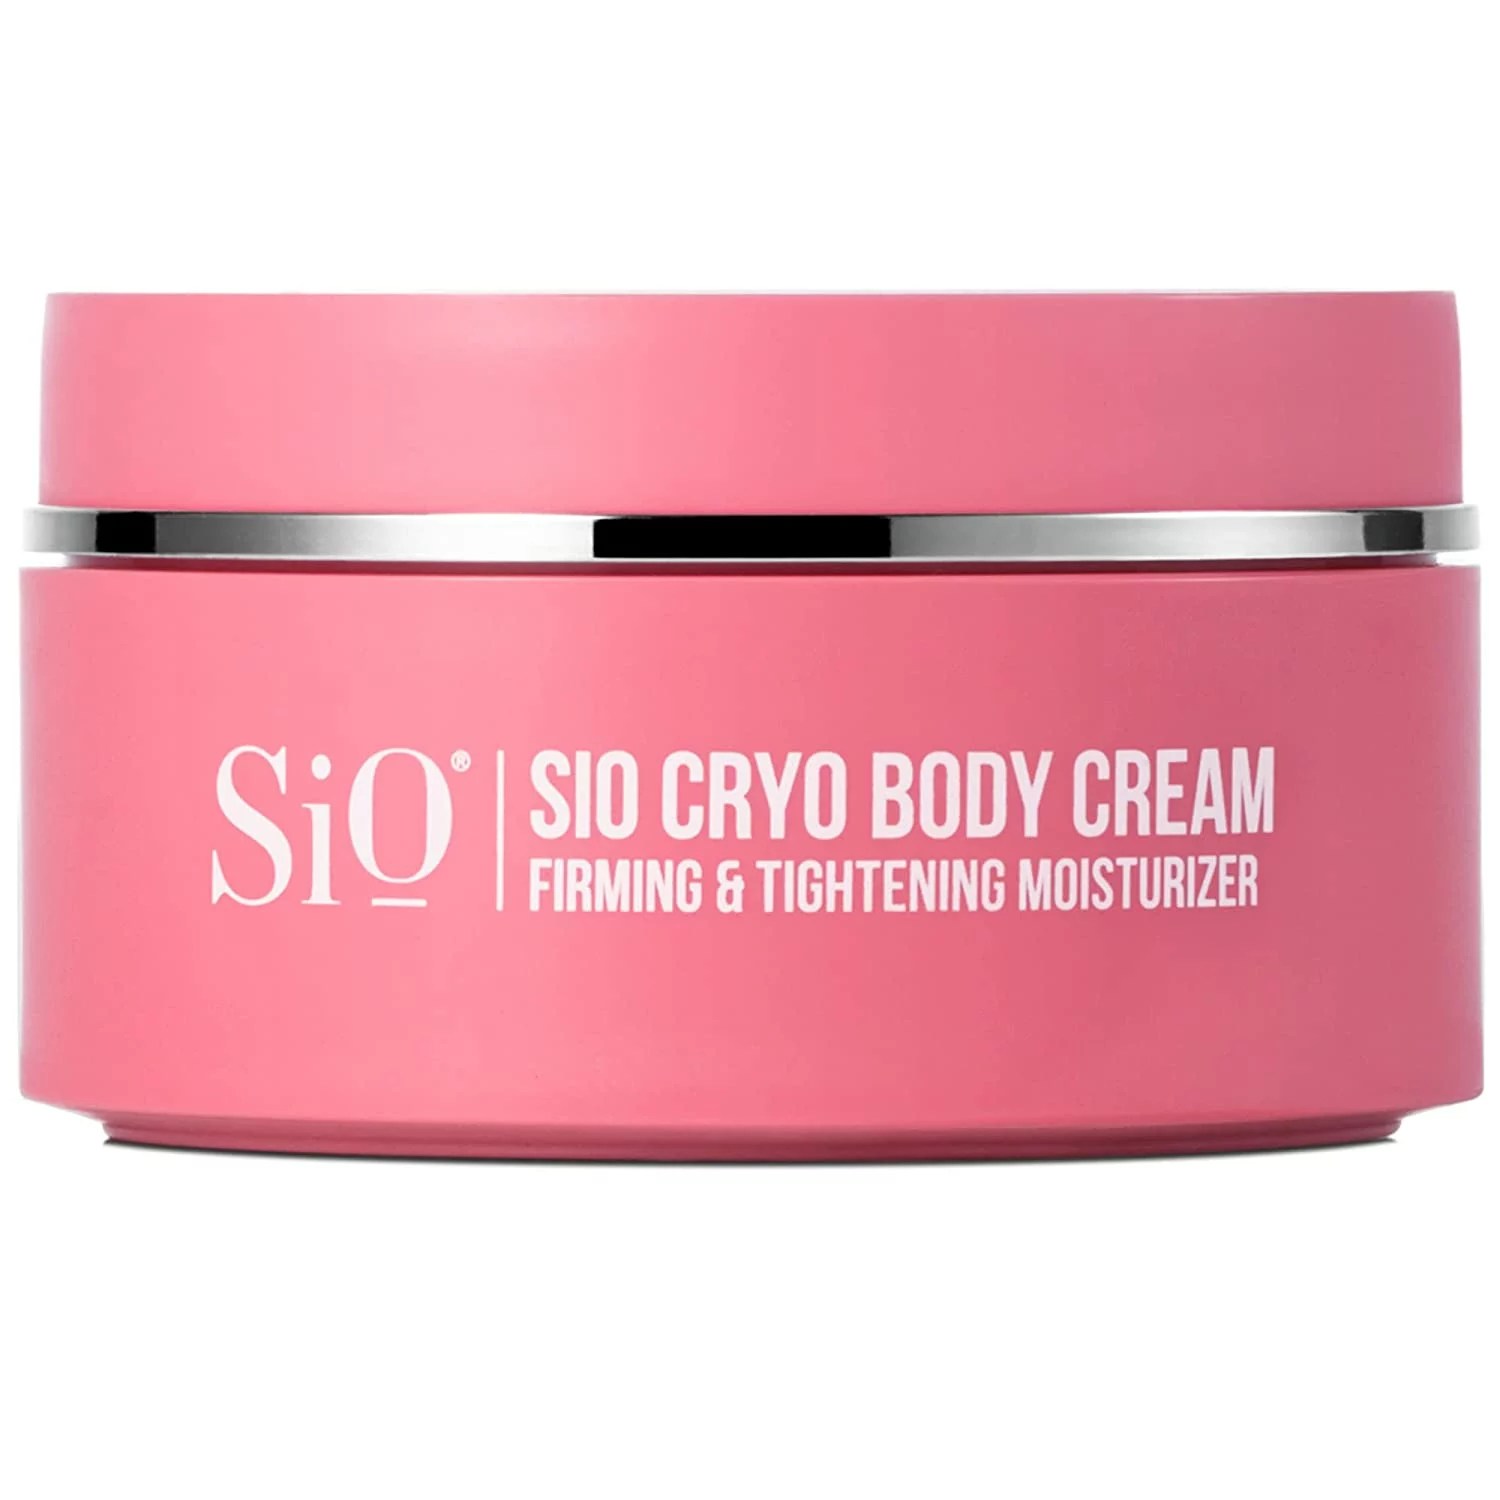 sio body cream, best creams for breasts